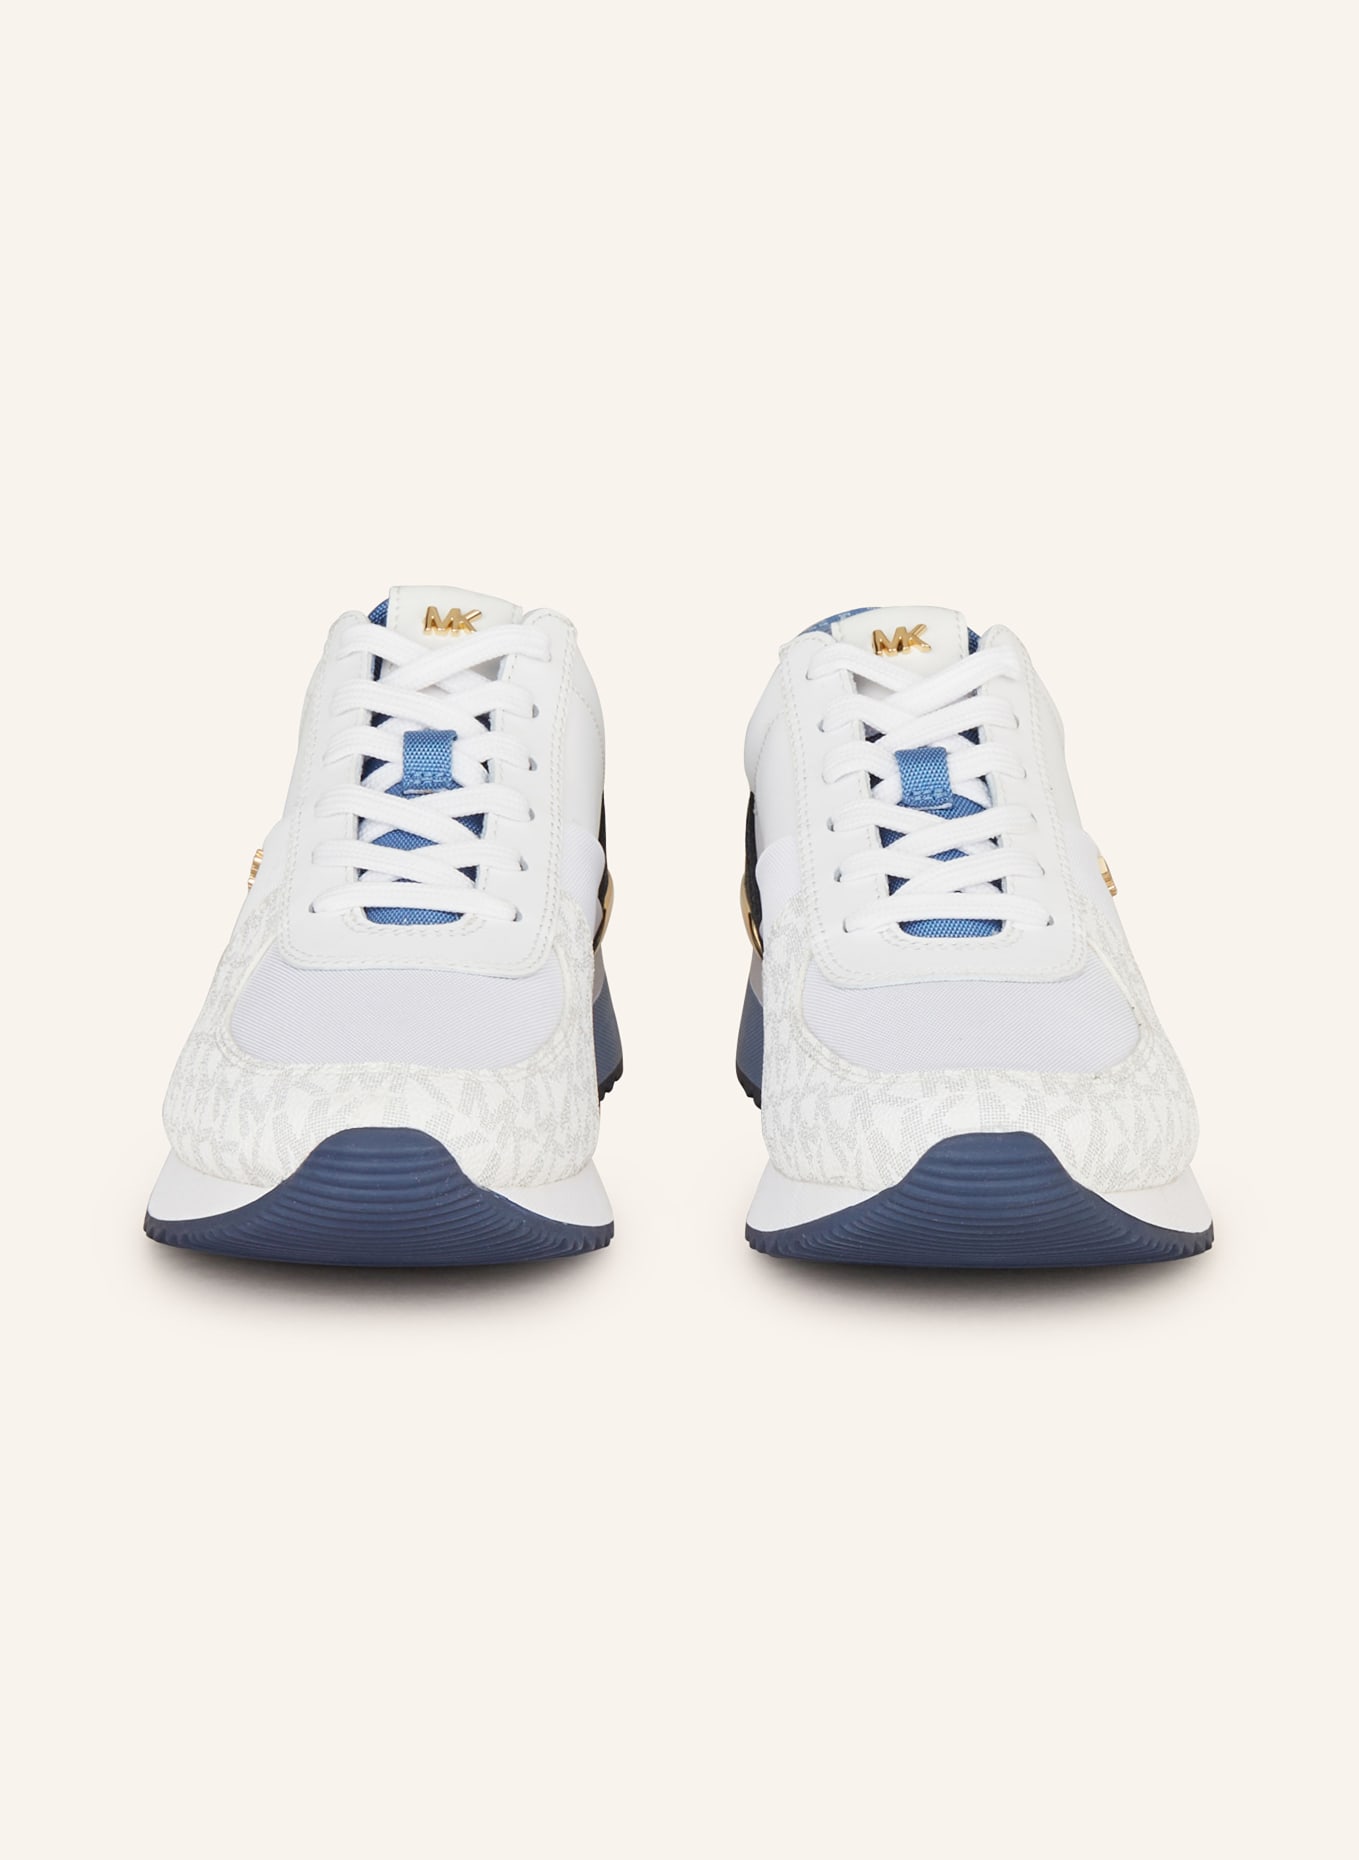 MICHAEL KORS Sneaker ALLIE, Farbe: 455 french blu multi (Bild 3)